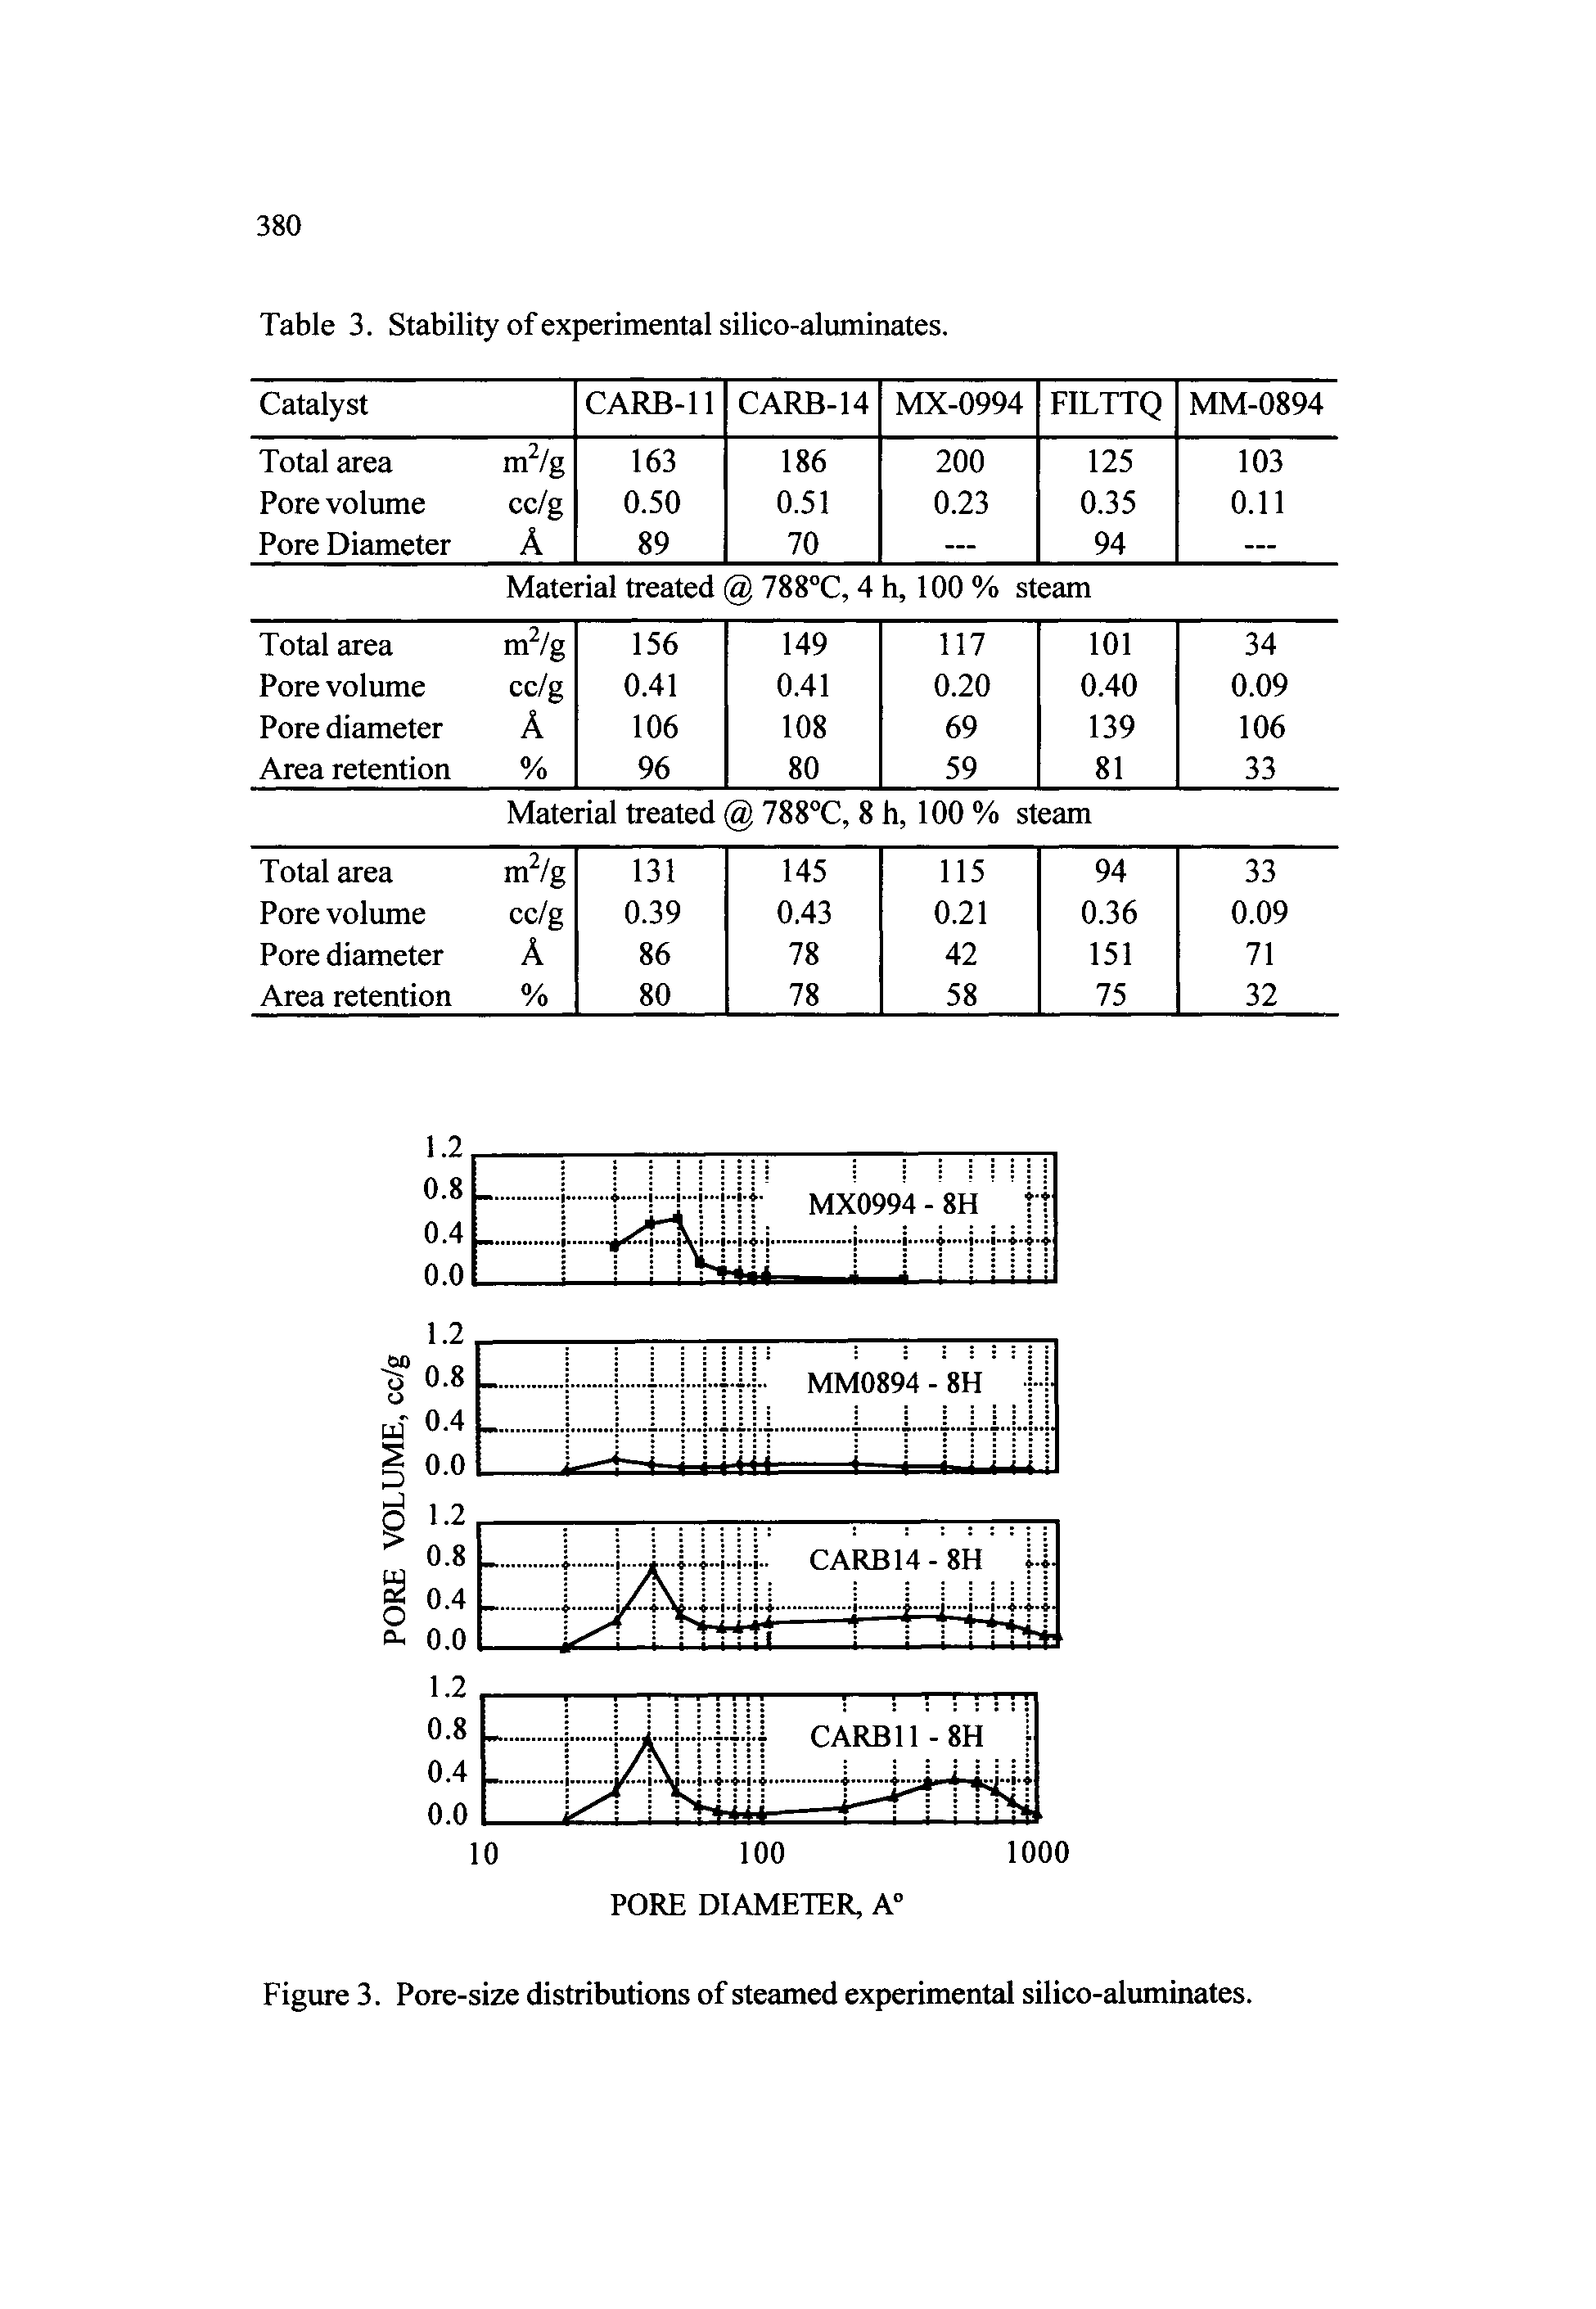 Figure 3. Pore-size distributions of steamed experimental silico-aluminates.